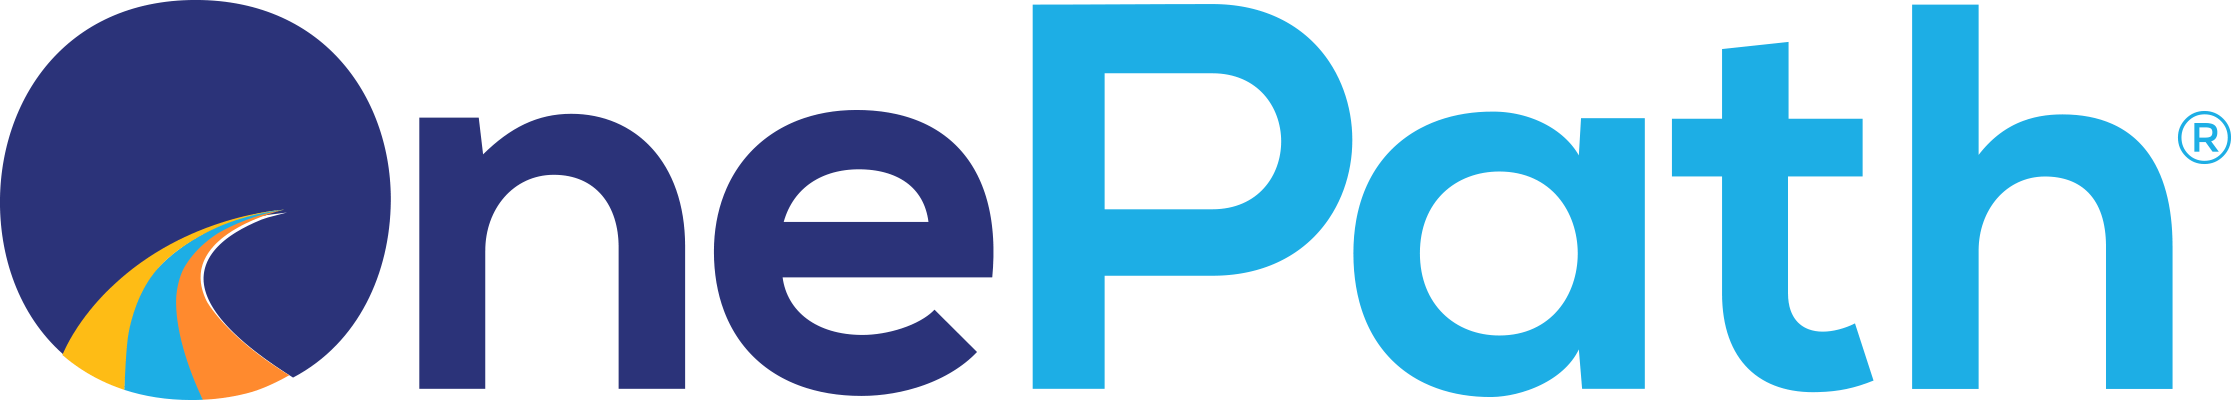 OnePath® logo.